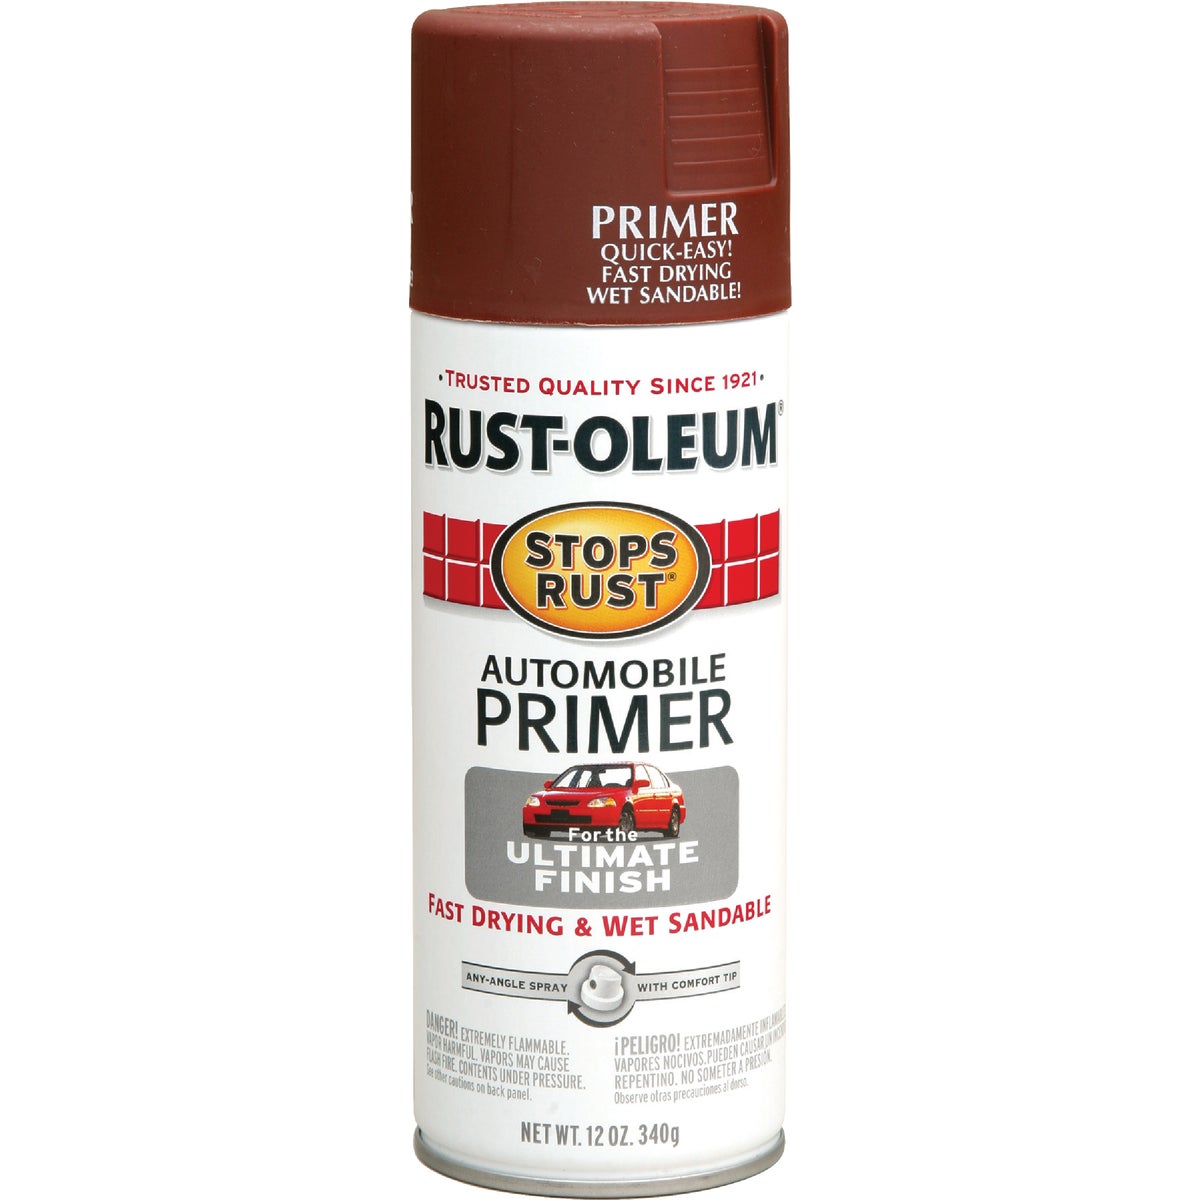 Item 773565, Rust-Oleum Stops Rust Automotive Primer Spray has a fast-drying, rust-